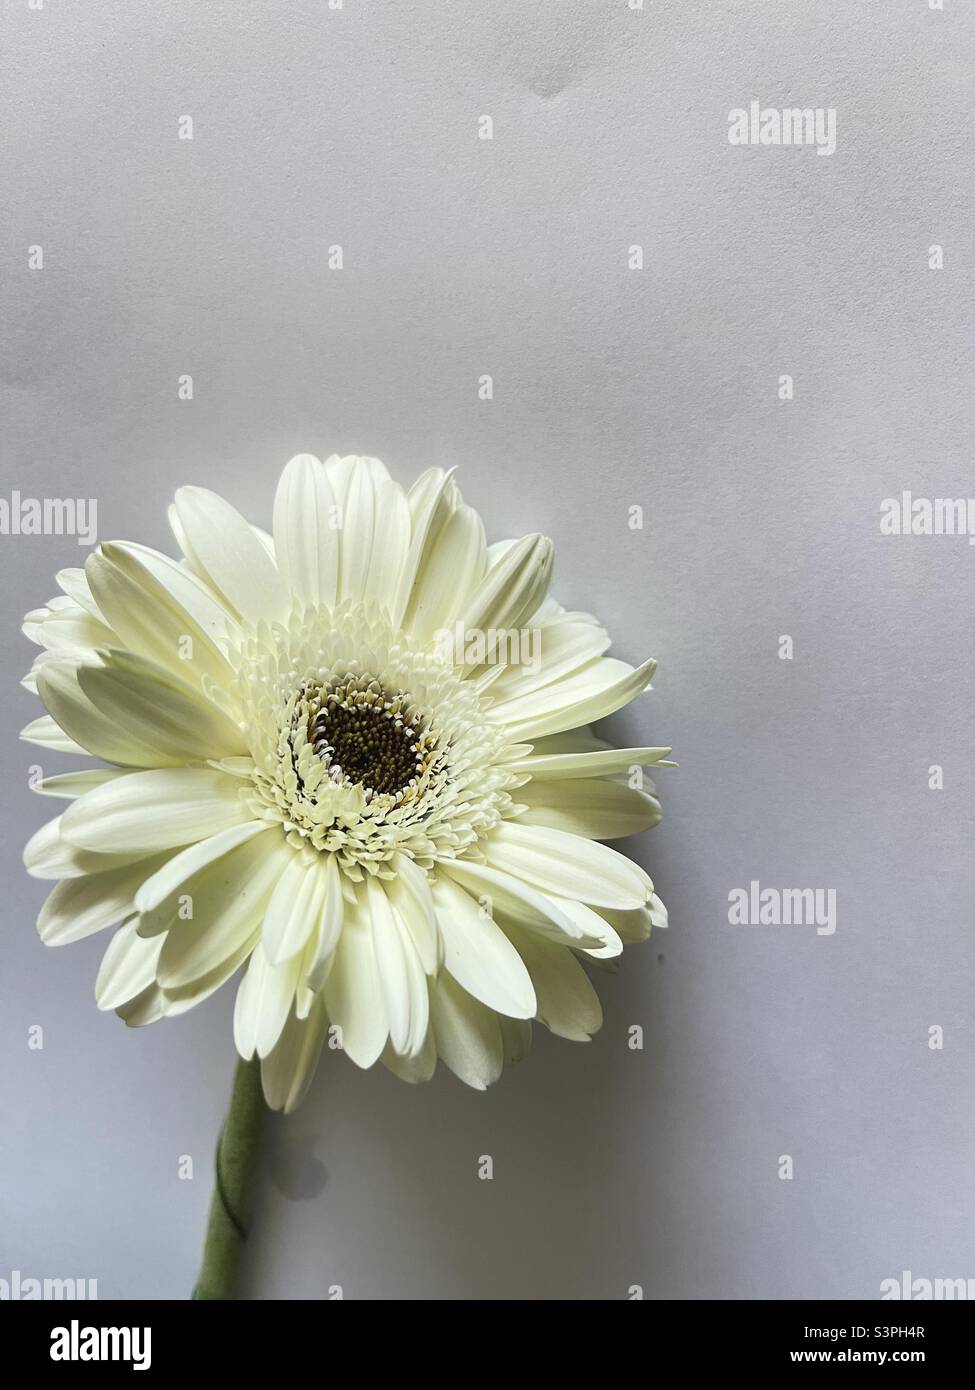 Gerbera a white flower Stock Photo